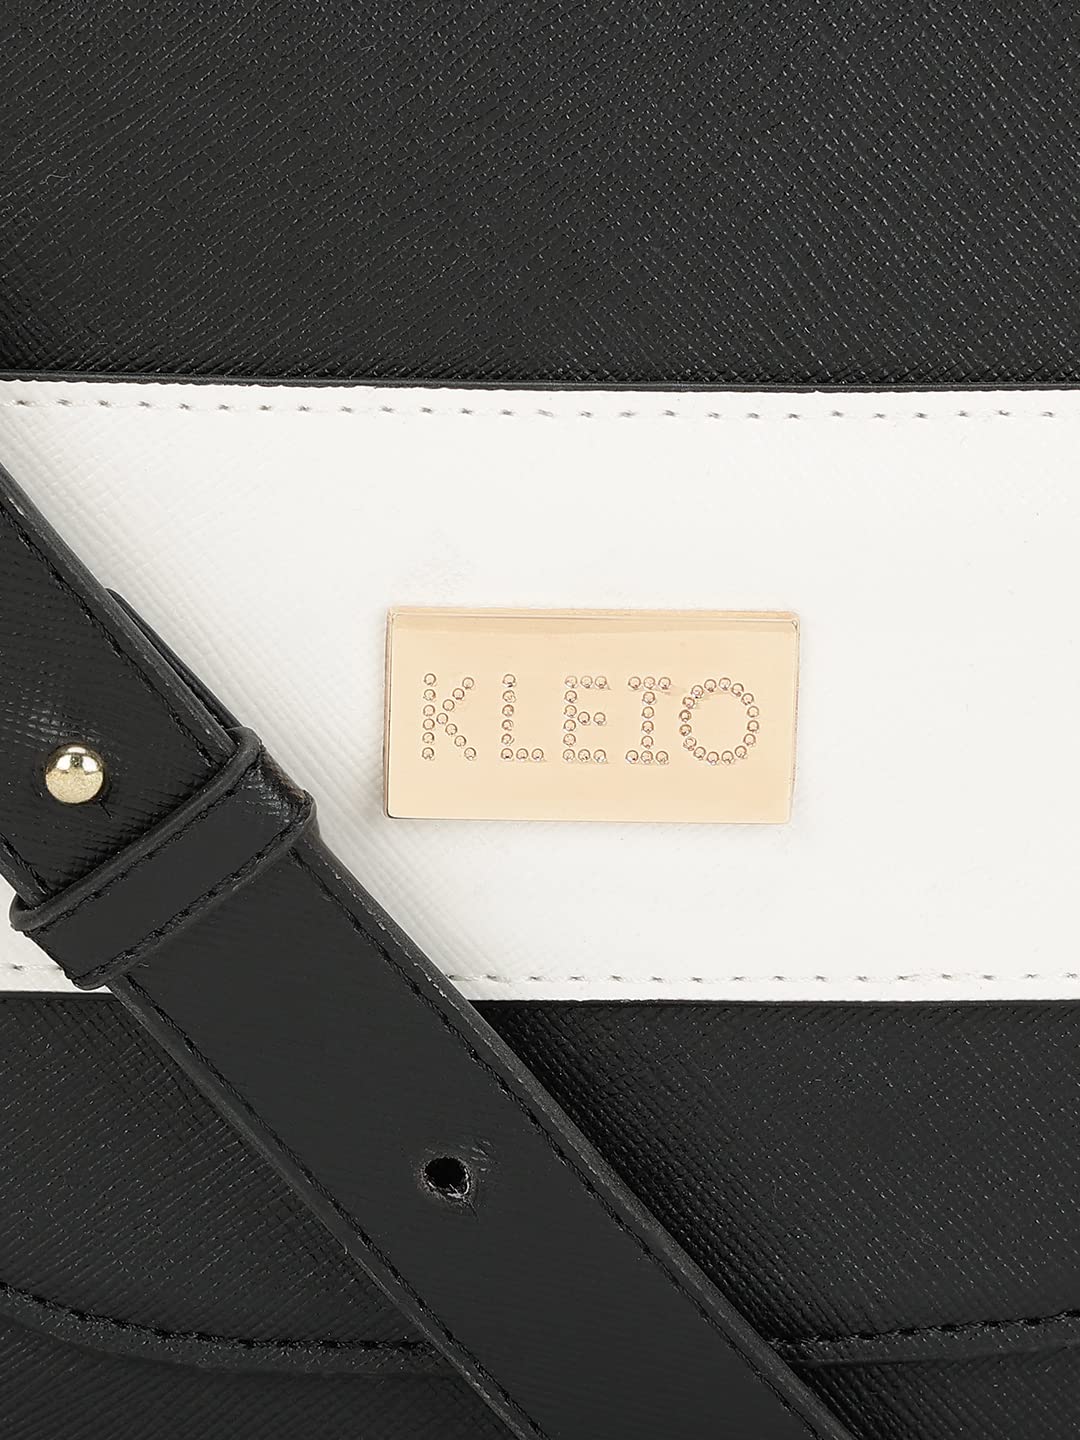 KLEIO Faux Leather Double Detachable Straps Structured Cross Body Side Sling Hand Bag for Women Girls(HO8077KL-BL)(BLACK)